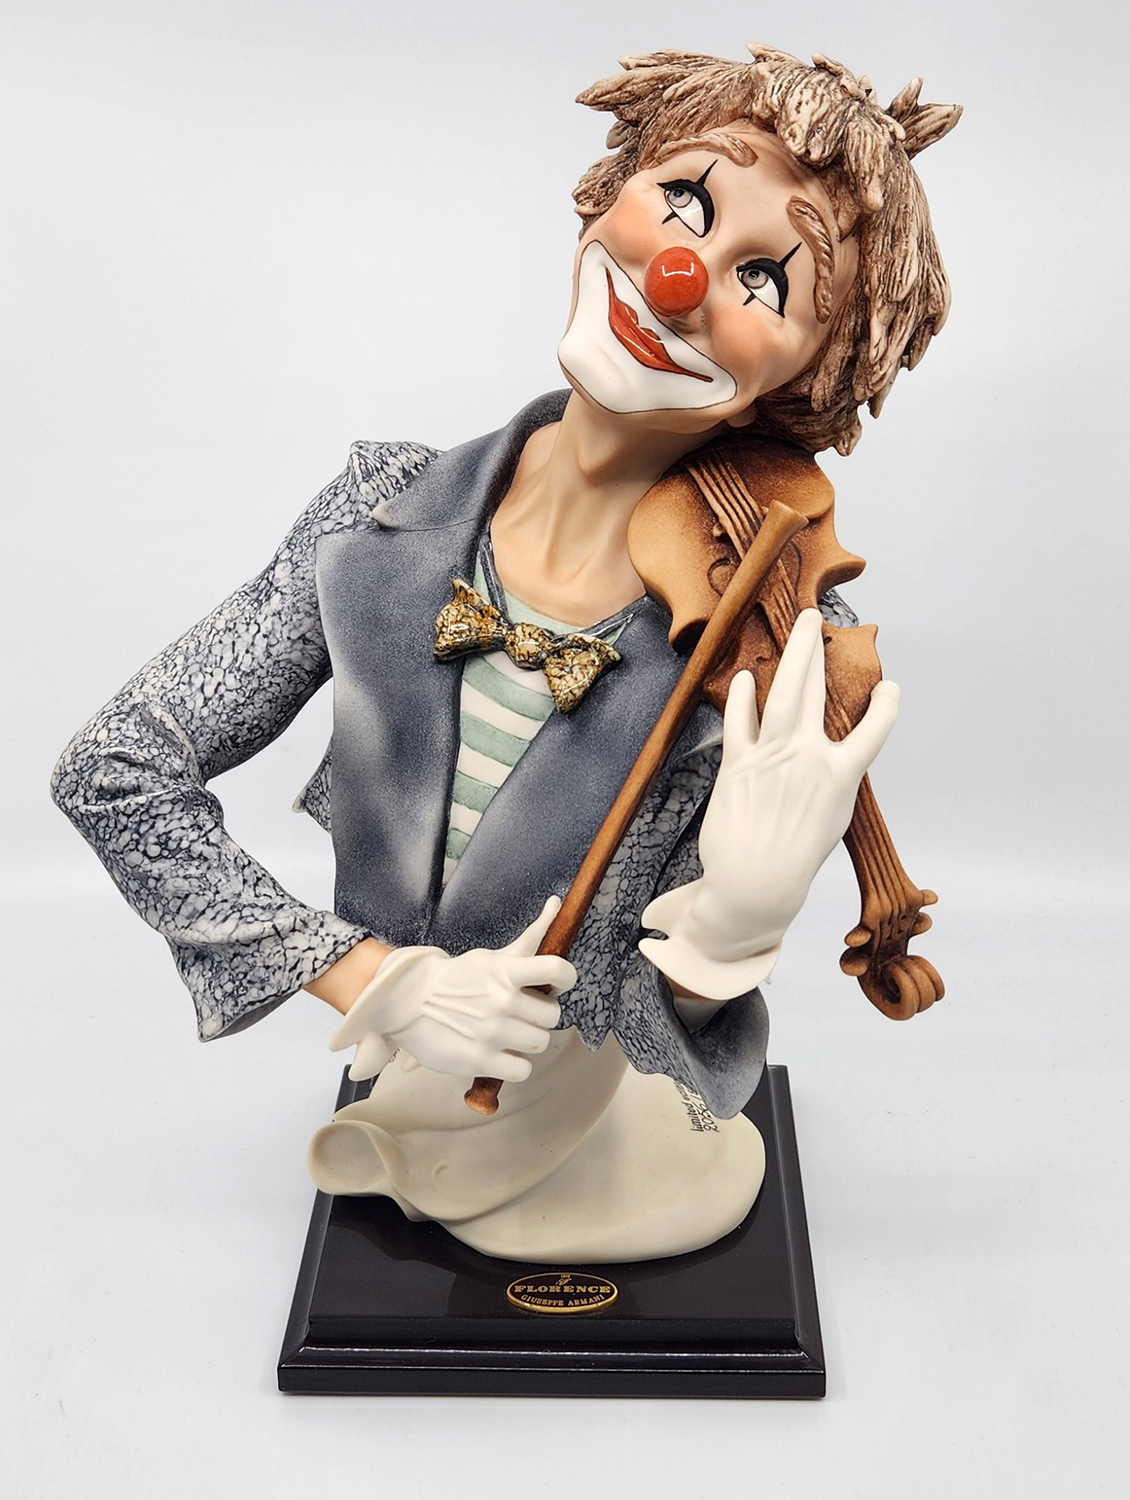 Giuseppe Armani The Fiddler Clown 0725E Limited Edition Sculpture.